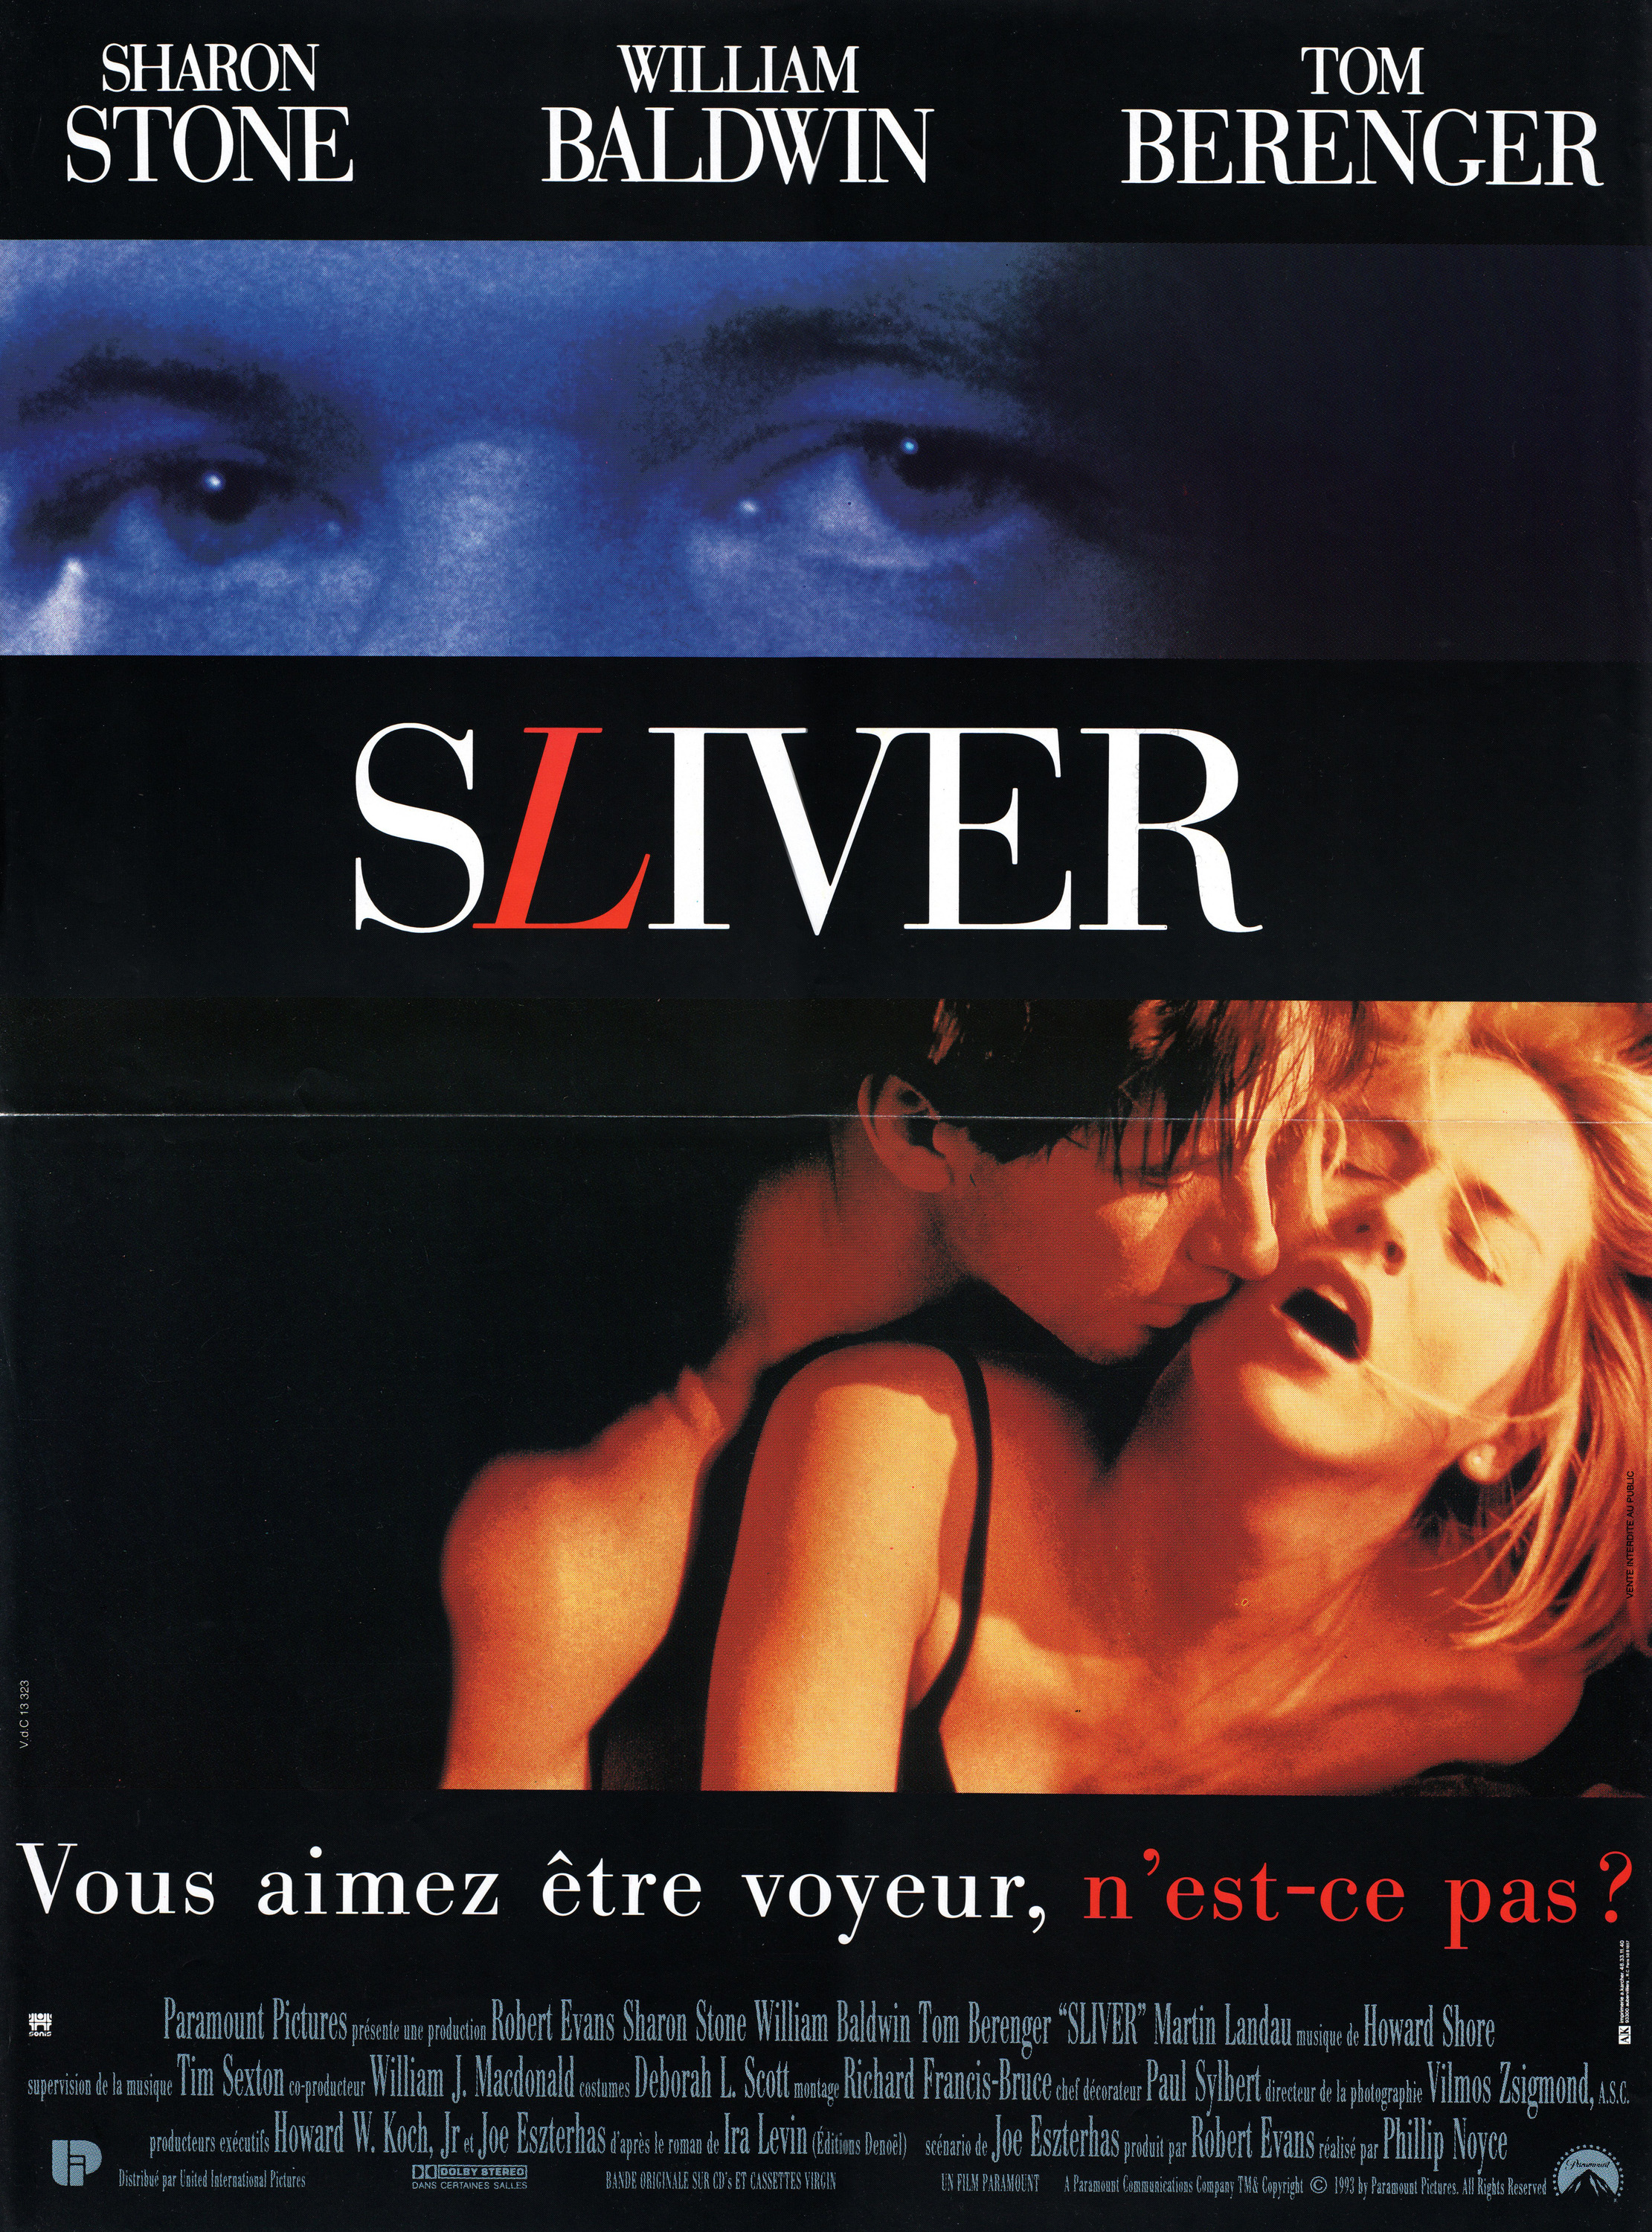 Mega Sized Movie Poster Image for Sliver (#2 of 2)